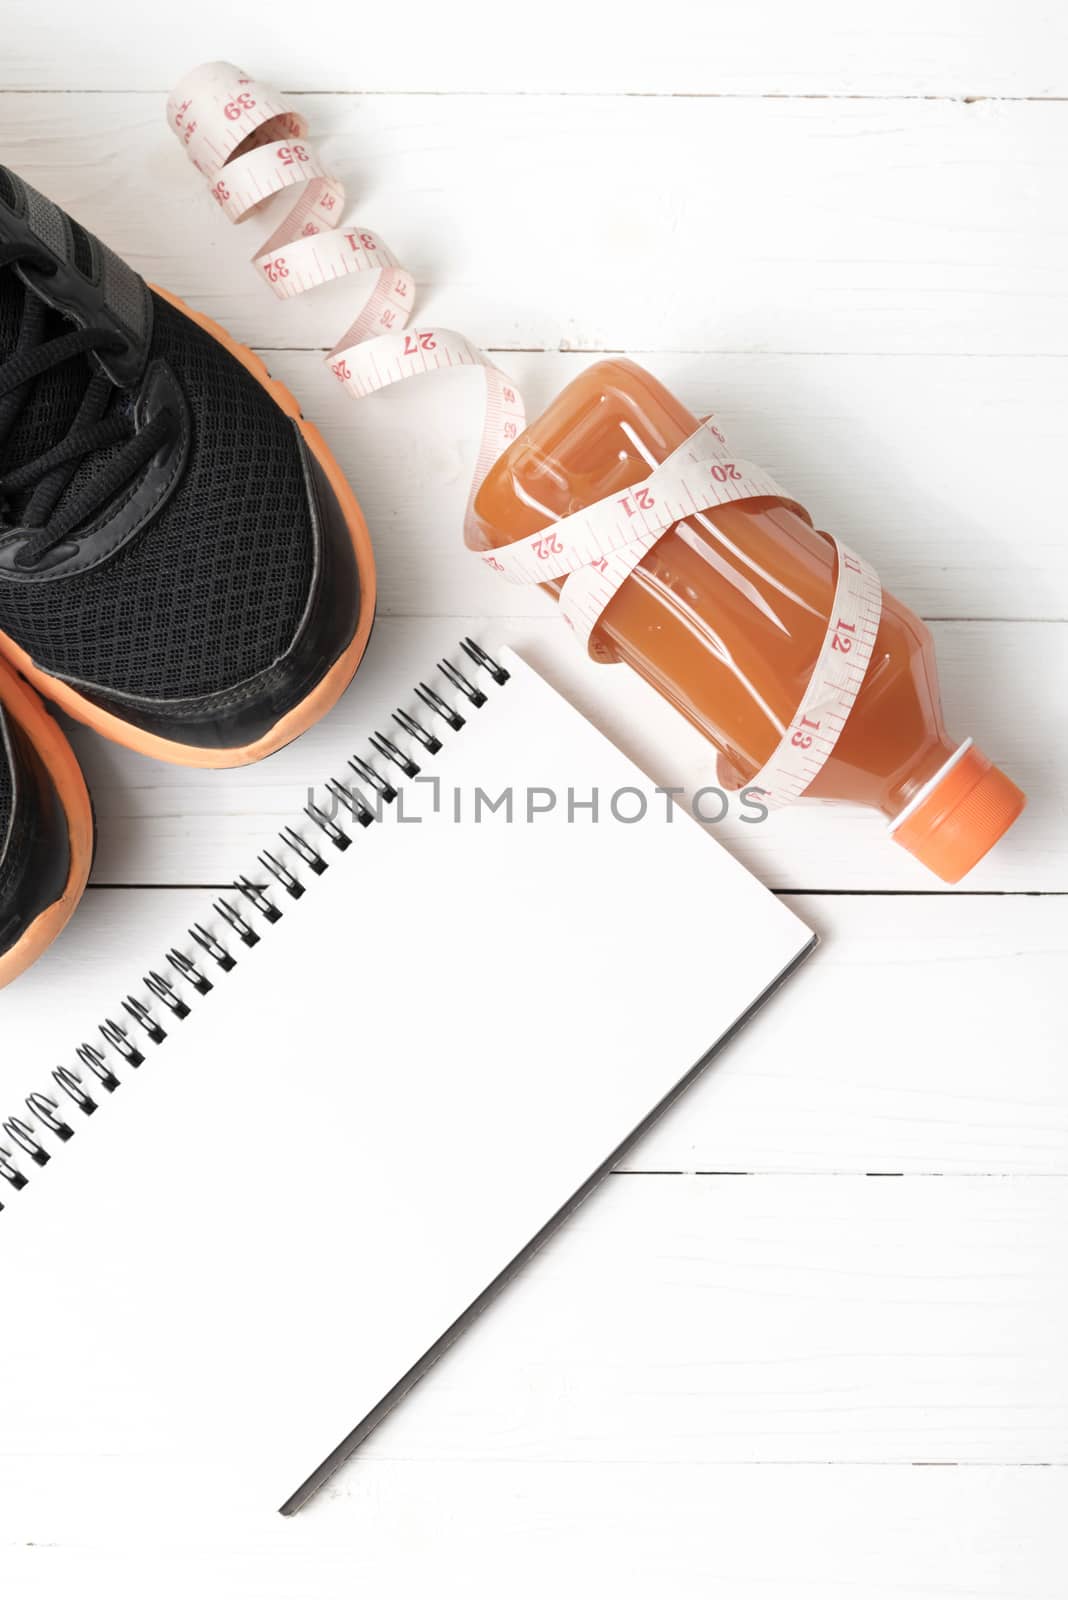 running shoes,orange juice,measuring tape and notepad on white wood background